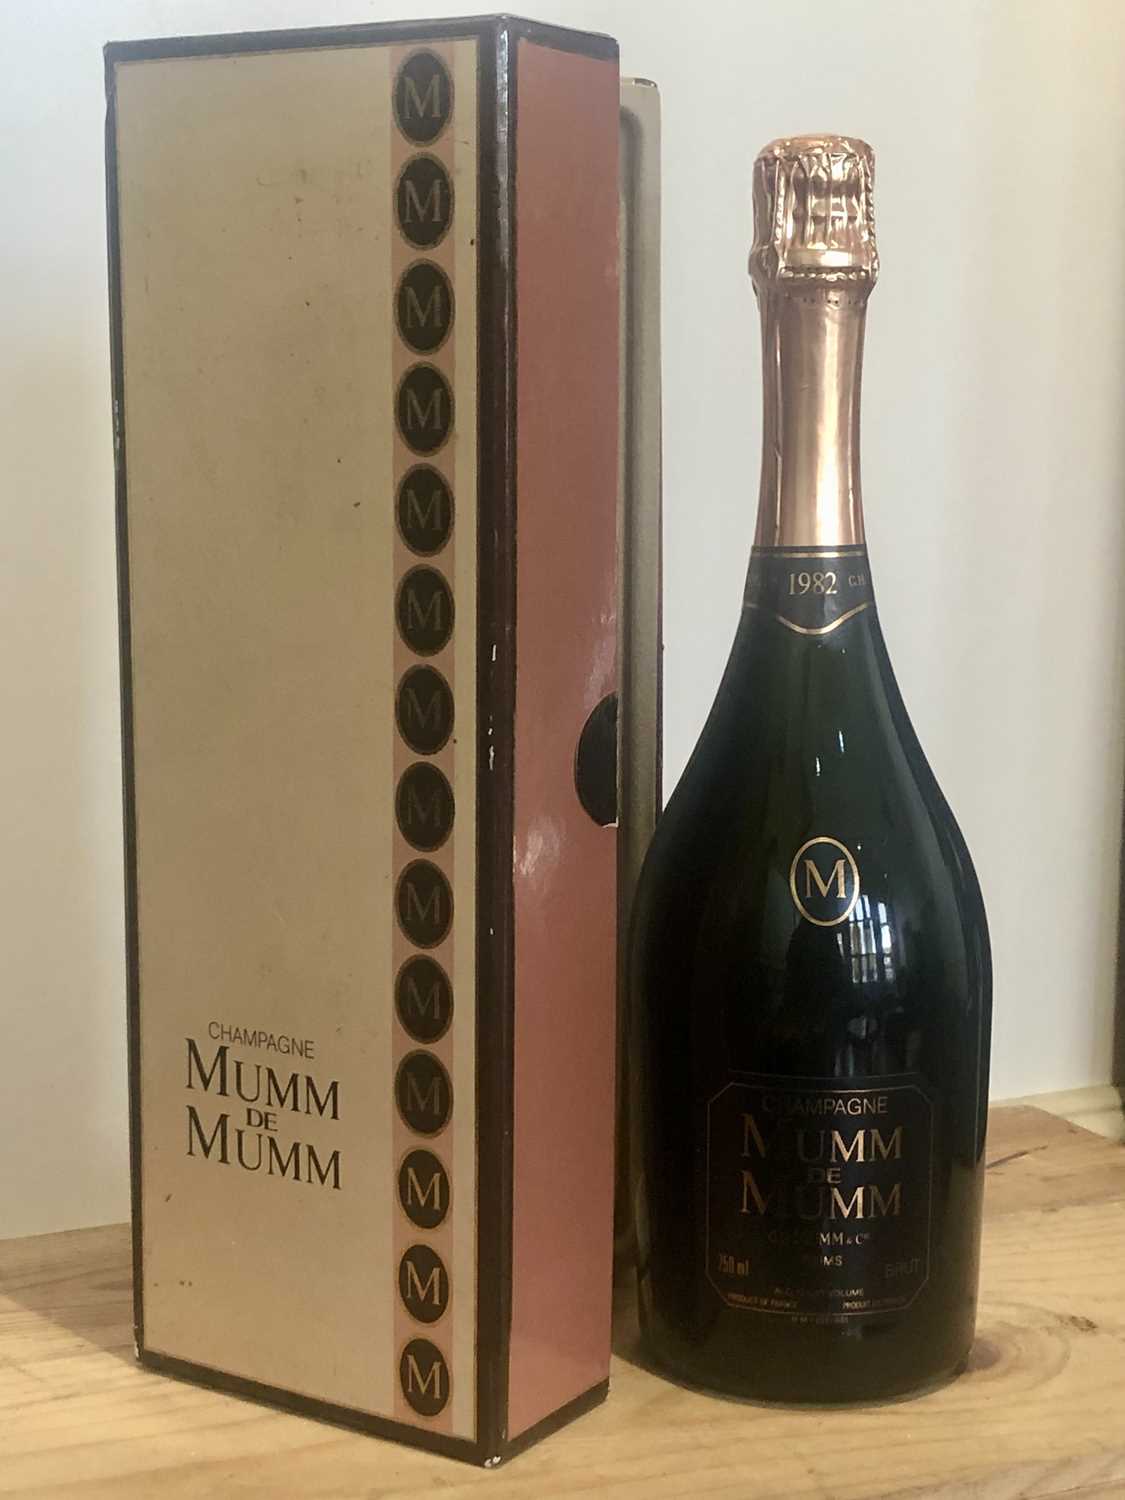 Lot 68 - 1 Bottle Fine Champagne Mumm de Mumm Vintage 1982